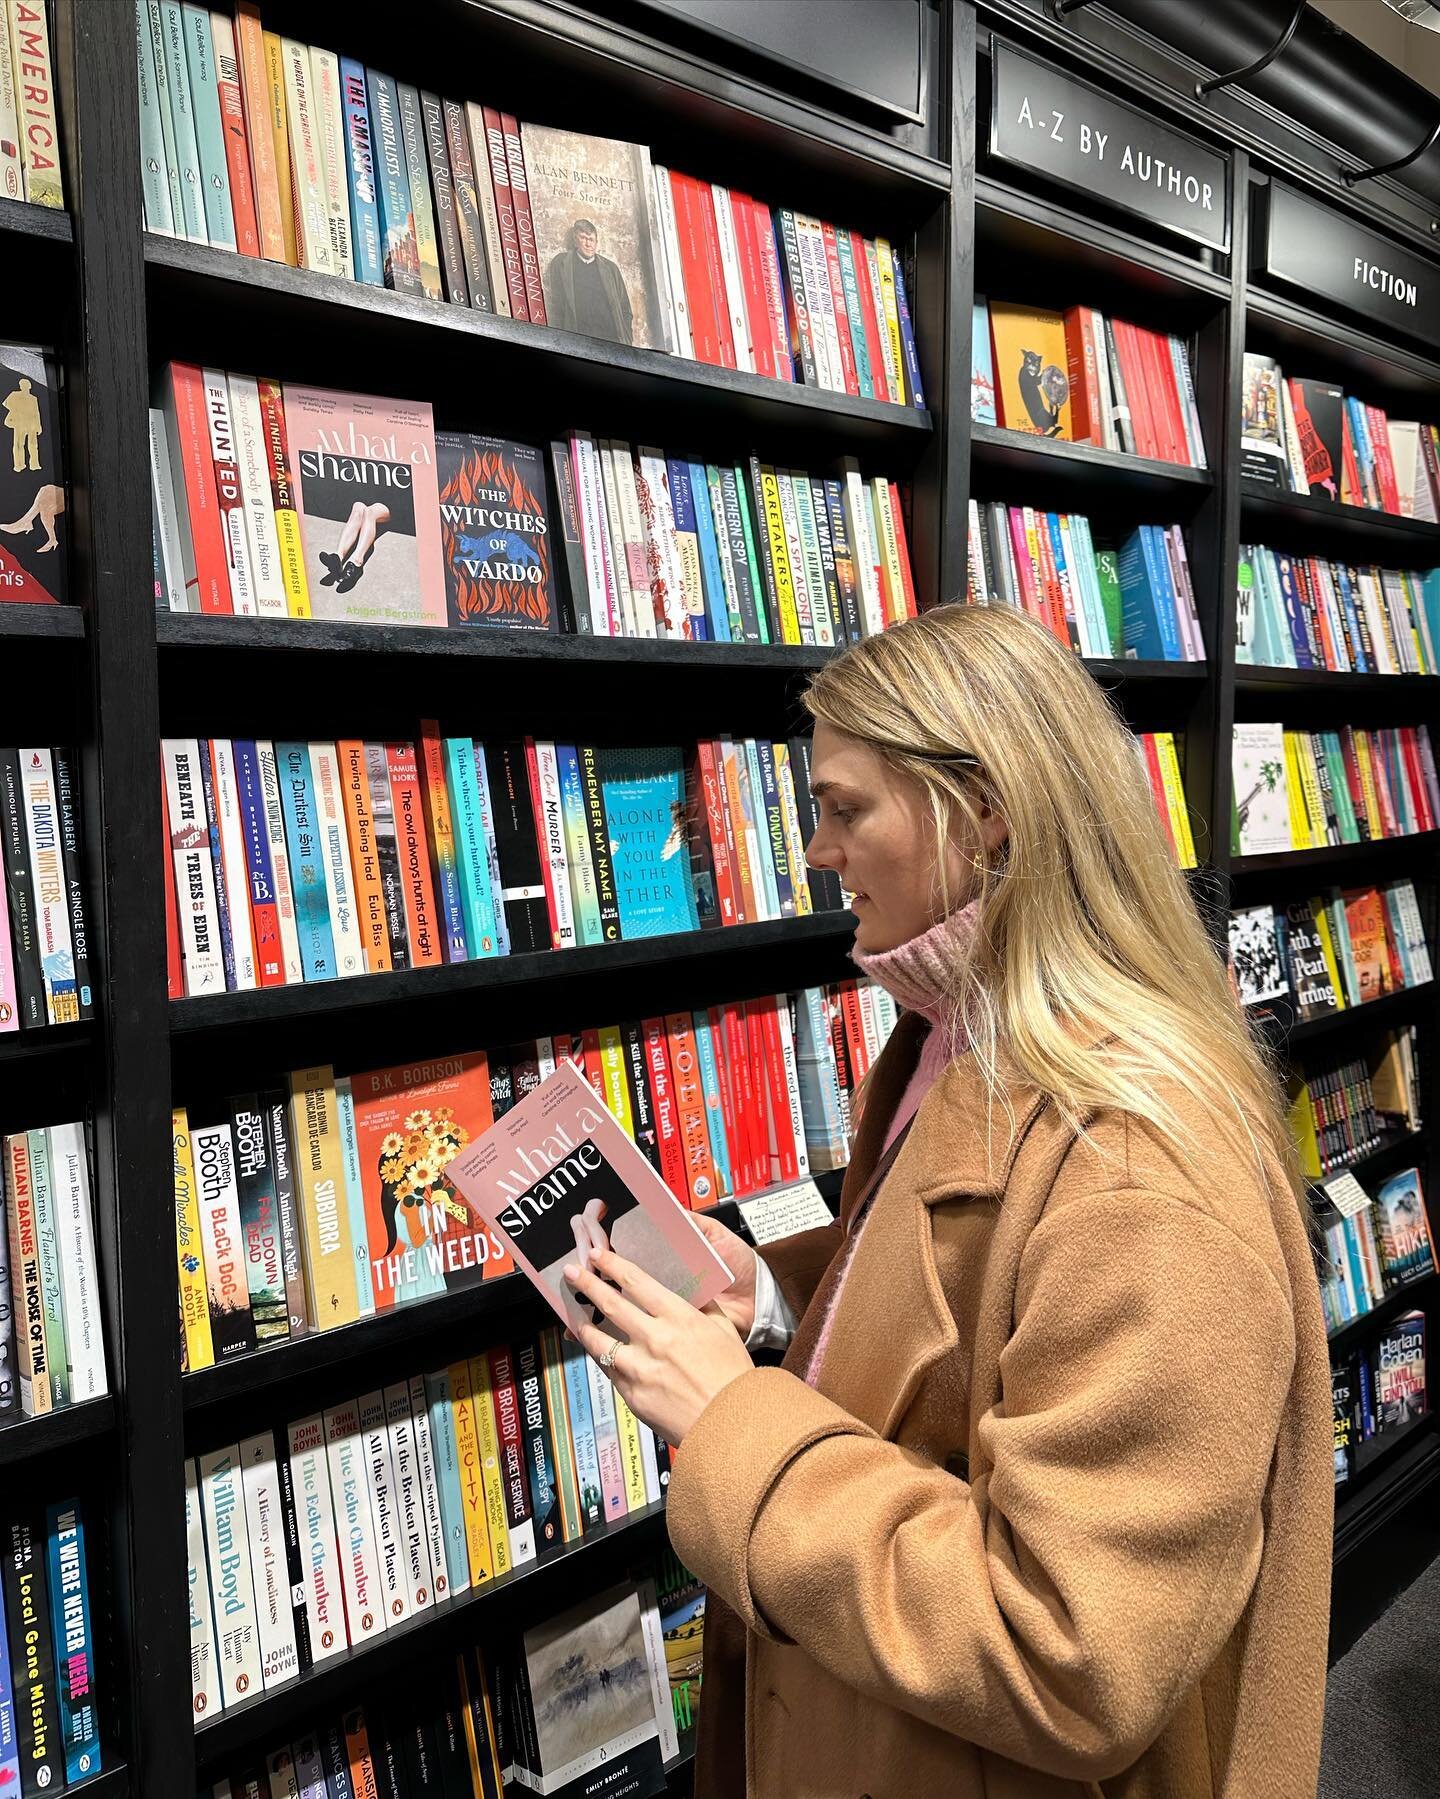 Browsing @waterstones bookstore in London 😍
.
.
.
.
.
#bookstagram #books #bookstagrammer #bookshelf